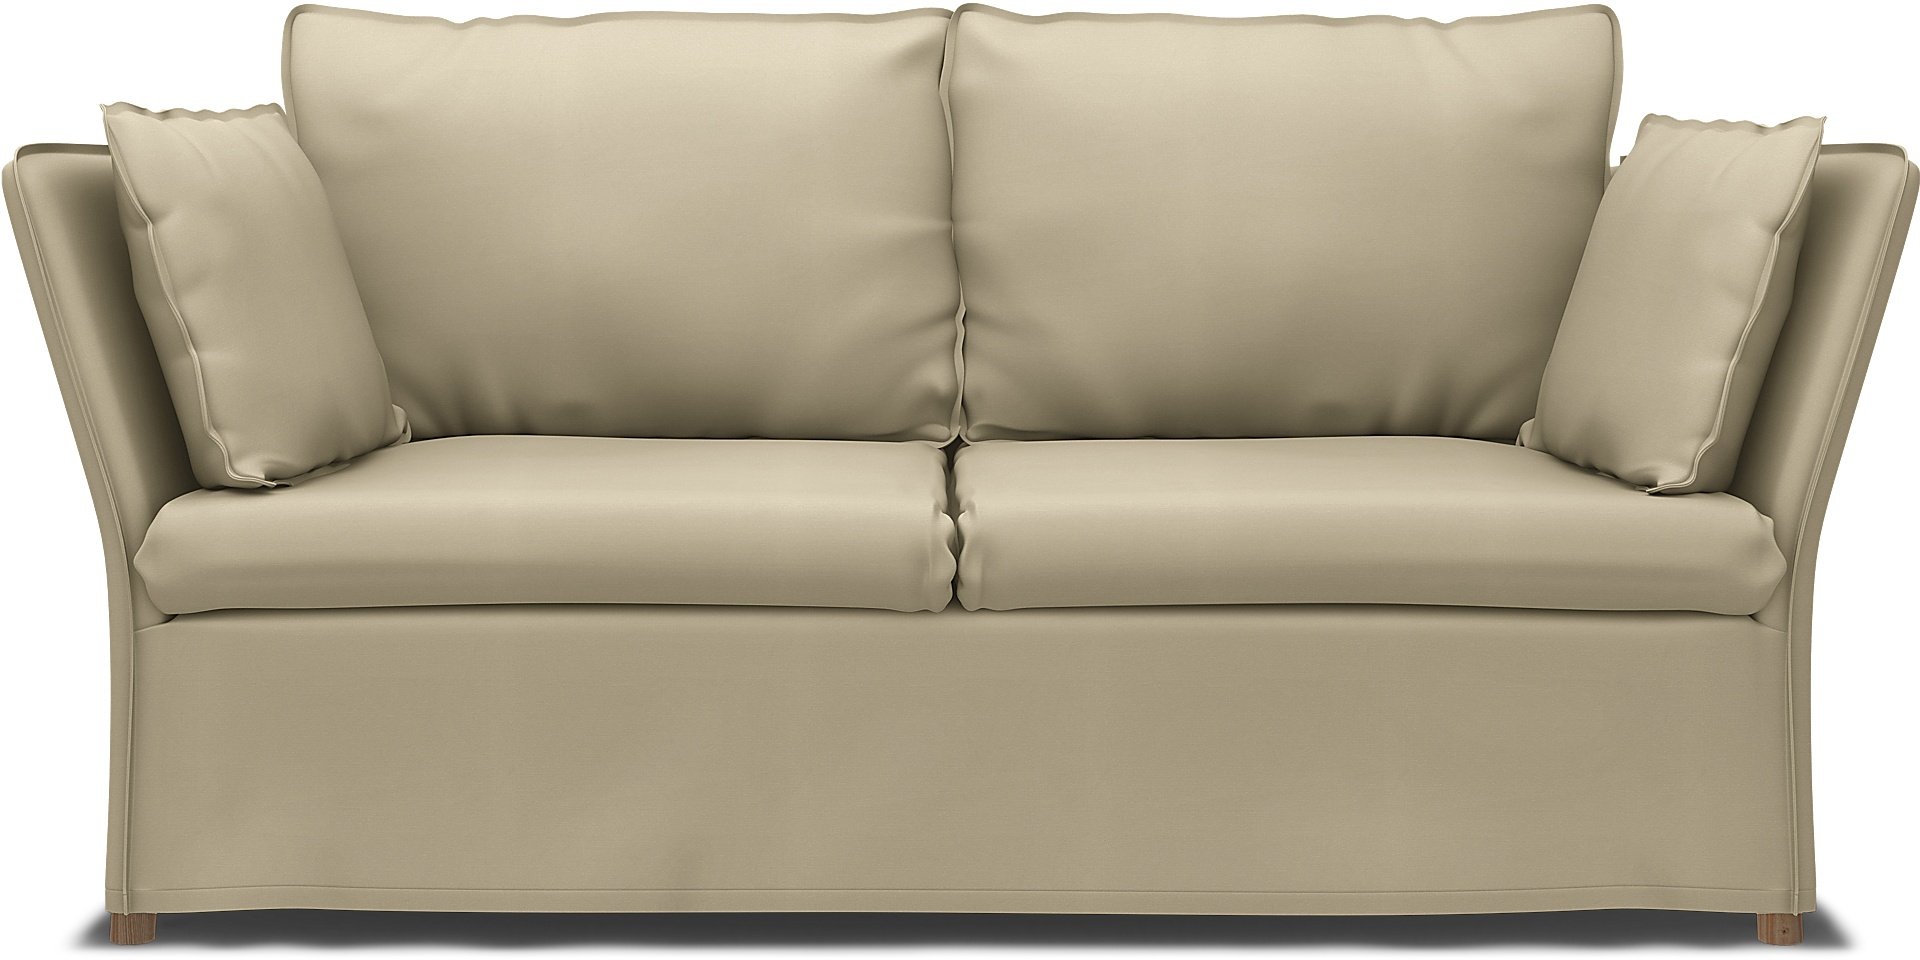 IKEA - Backsalen 2 seater sofa, Sand Beige, Cotton - Bemz